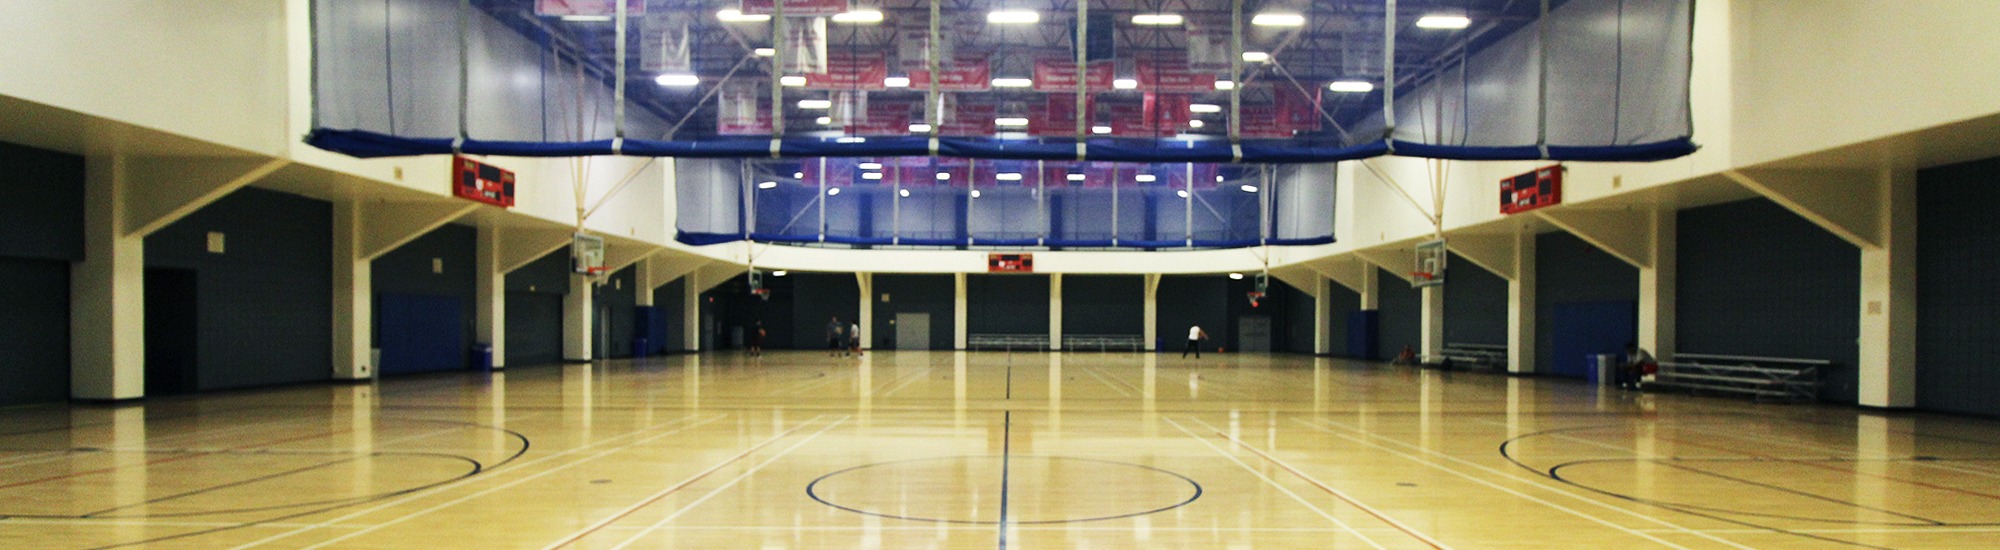 Three basketball courts with raised dividers at Campus Rec, UArizona